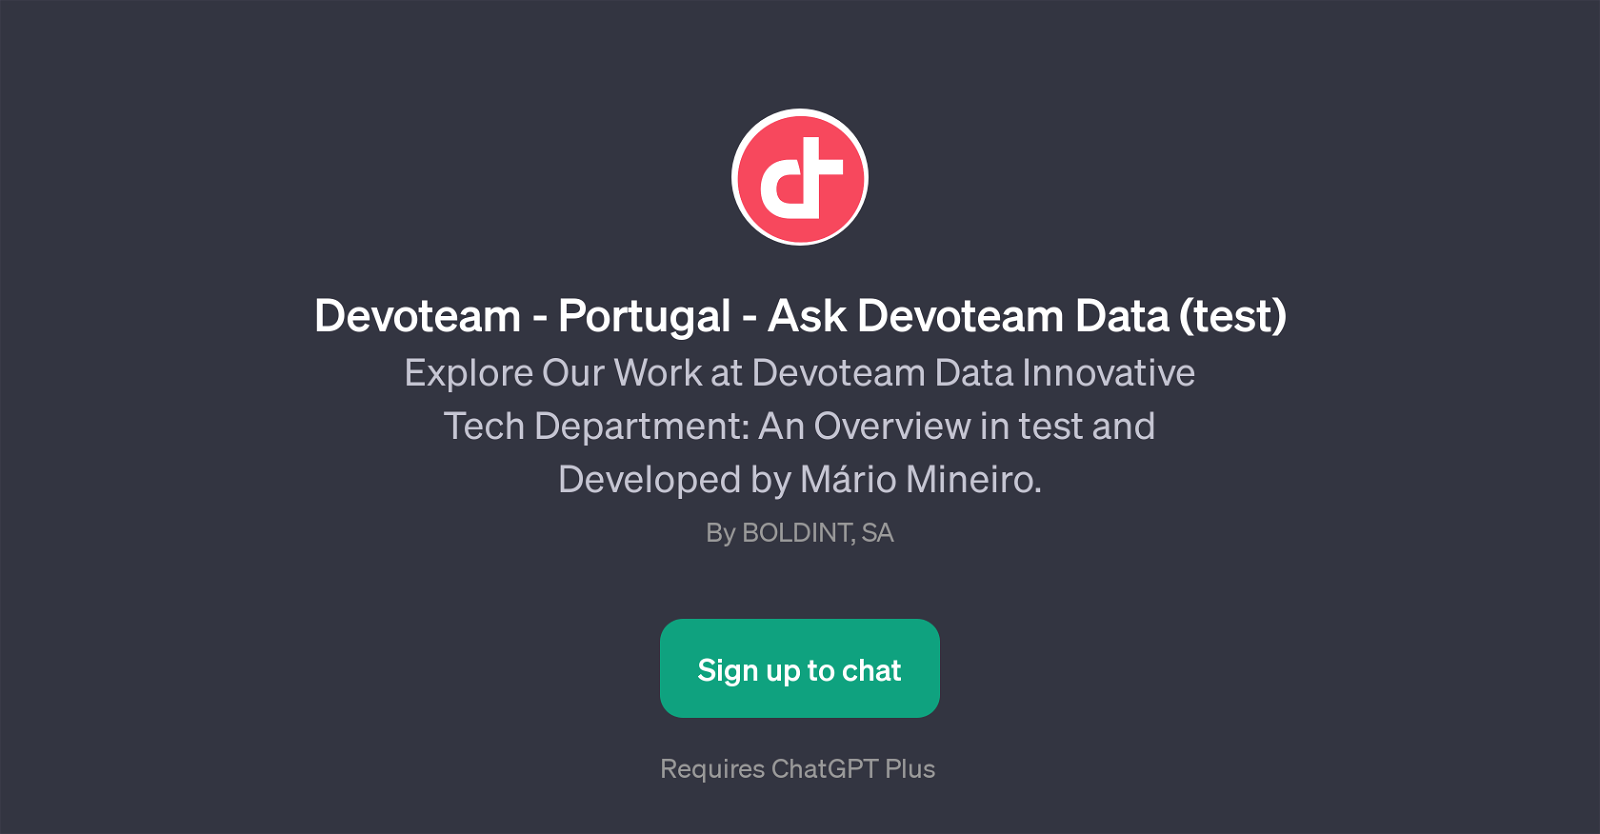 Devoteam Portugal - Ask Devoteam Data (test) website